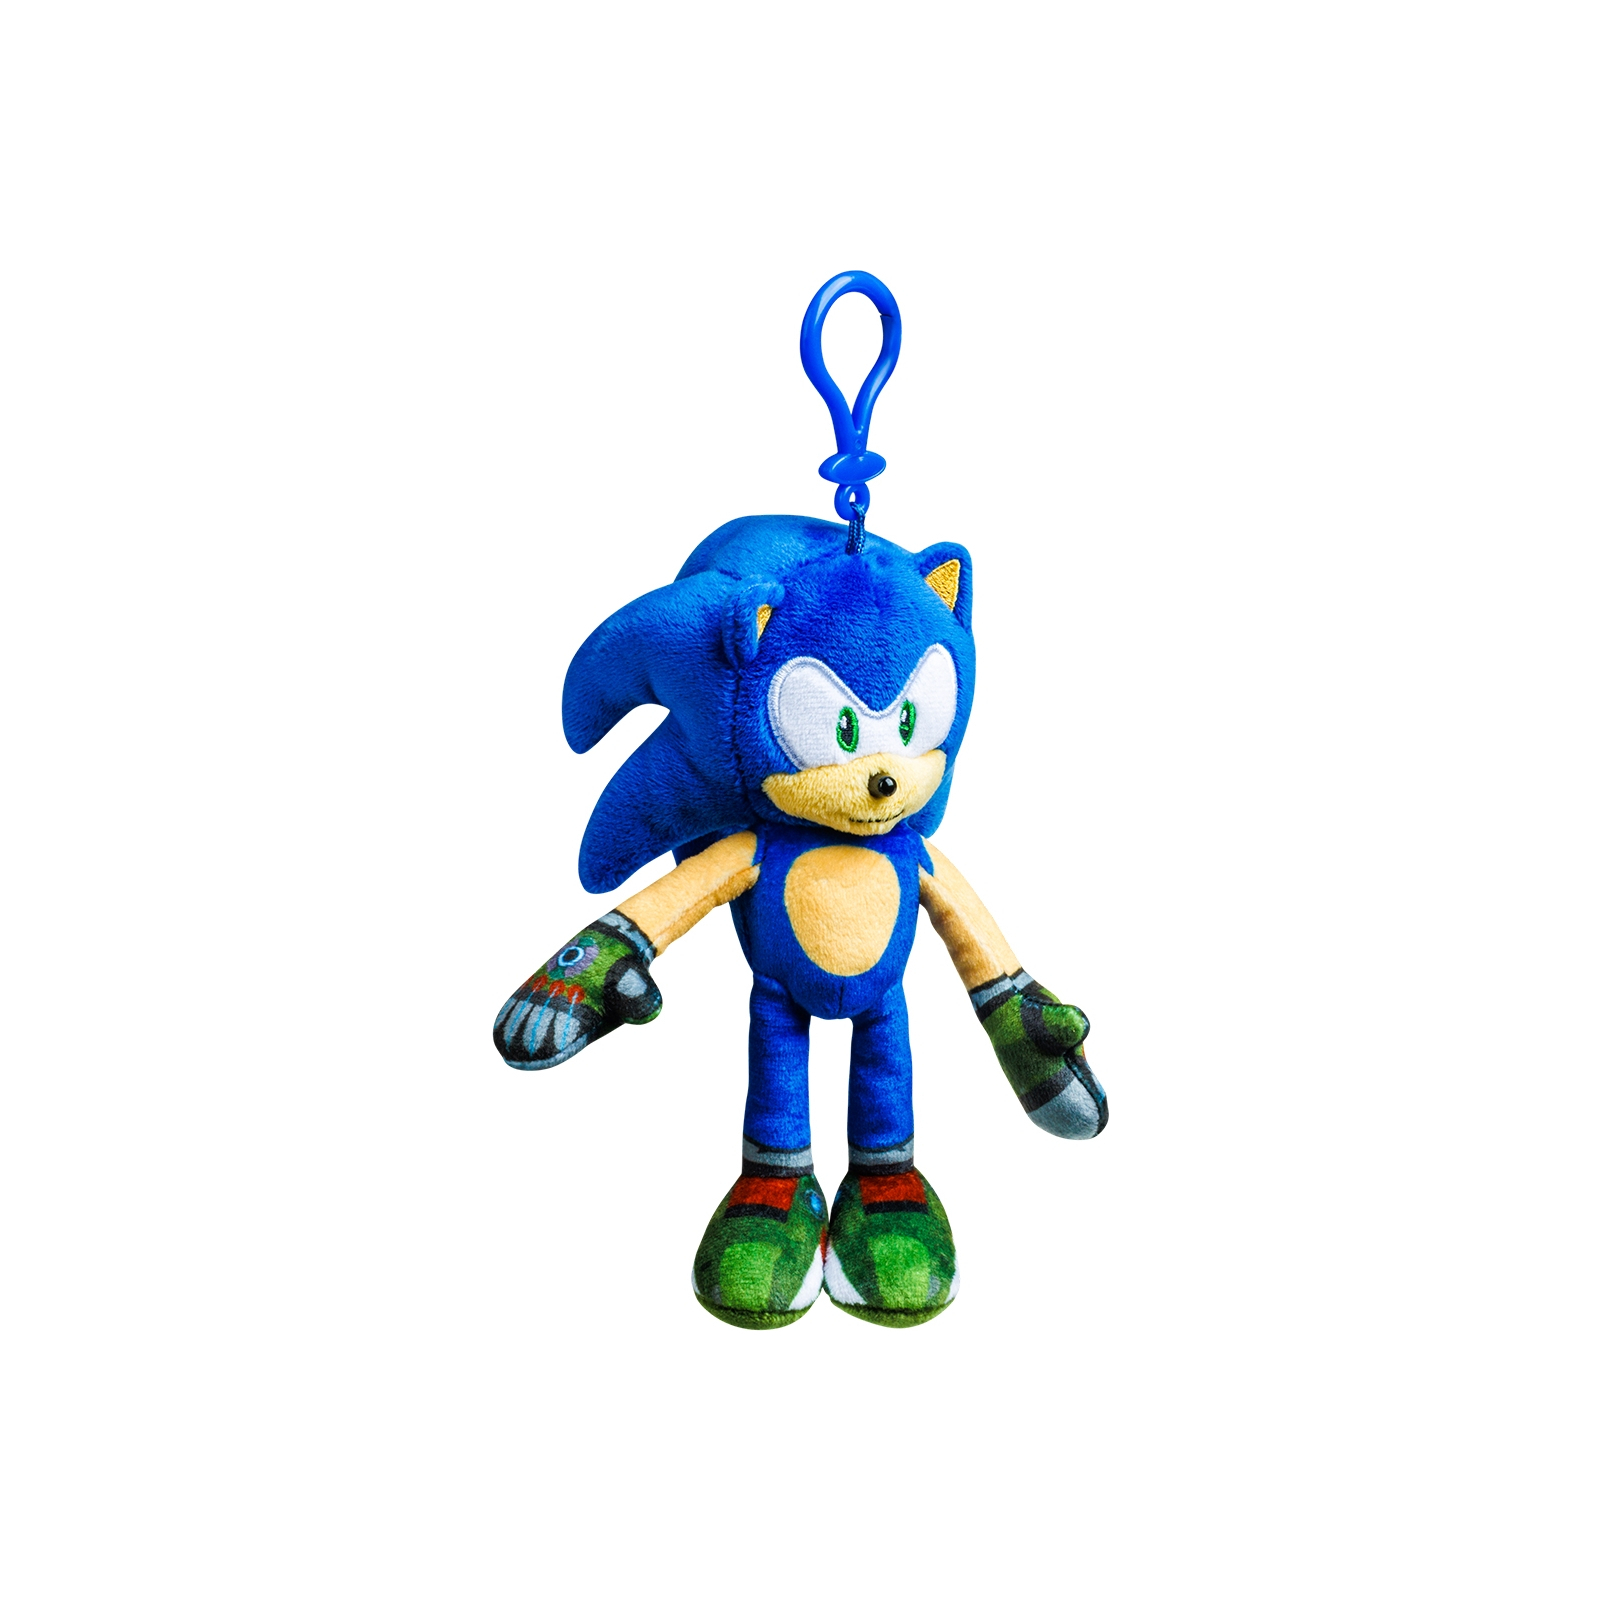 М'яка іграшка Sonic Prime на кліпсі – Сонік 15 см (SON7004A)